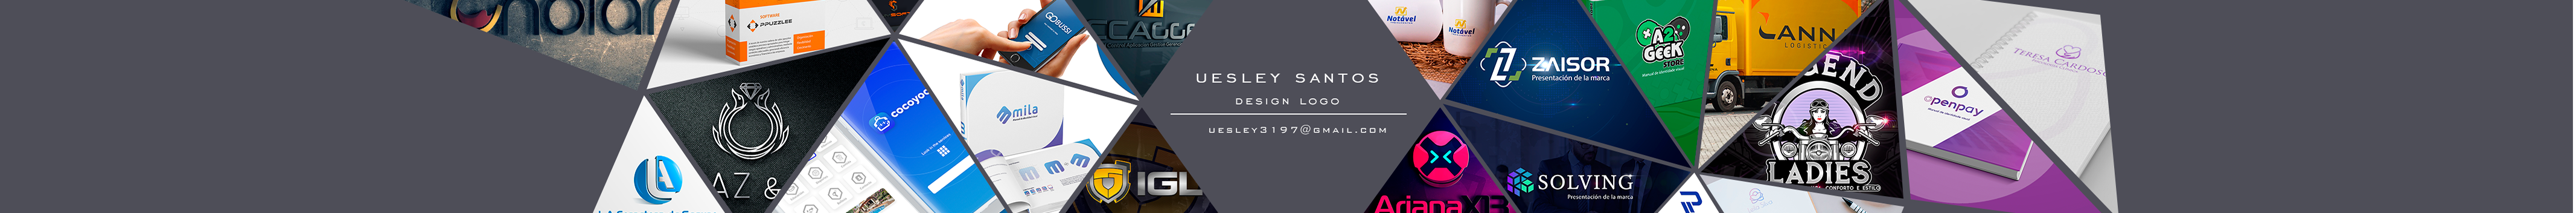 Baner profilu użytkownika Uesley Melo dos Santos